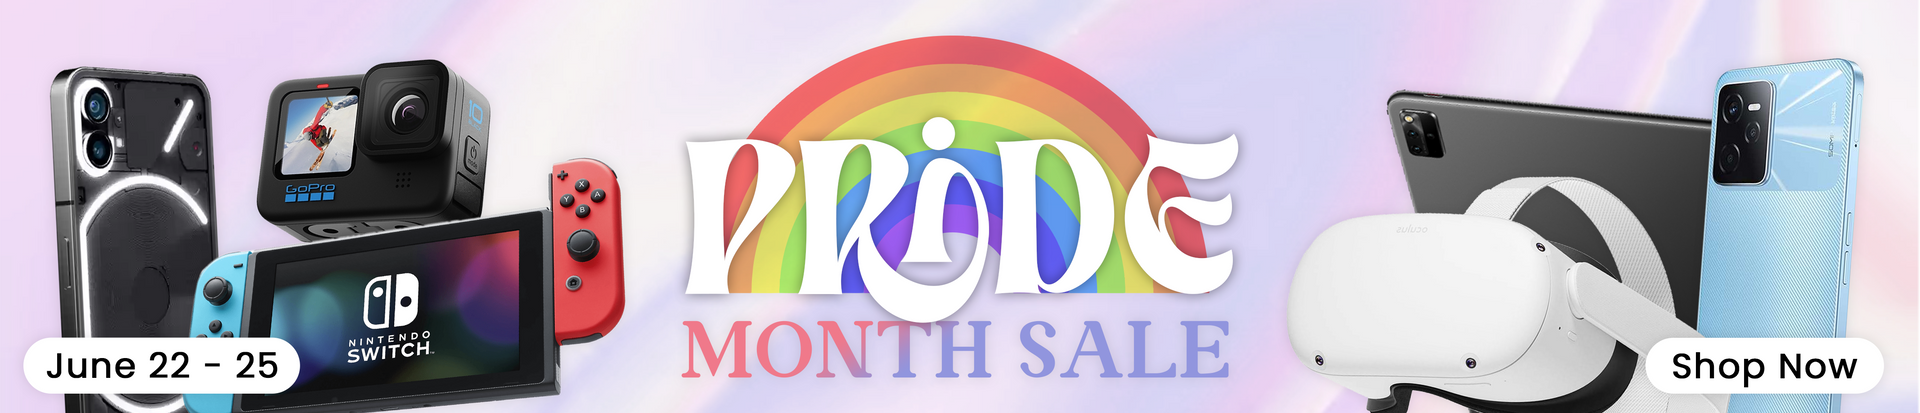 Pride Month Sale